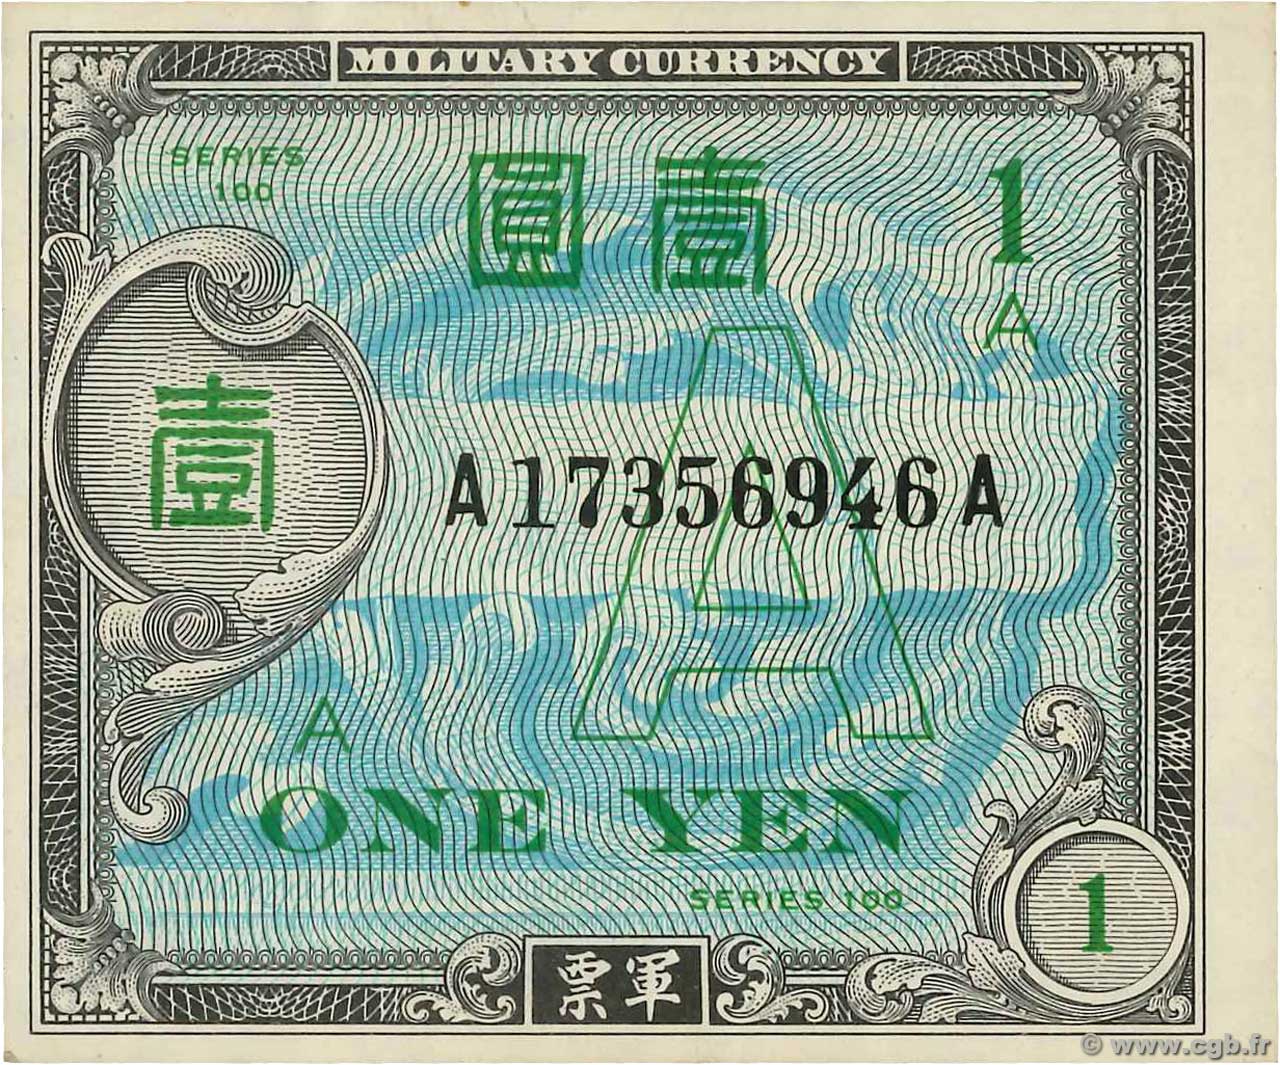 1 Yen GIAPPONE  1945 P.066 q.FDC